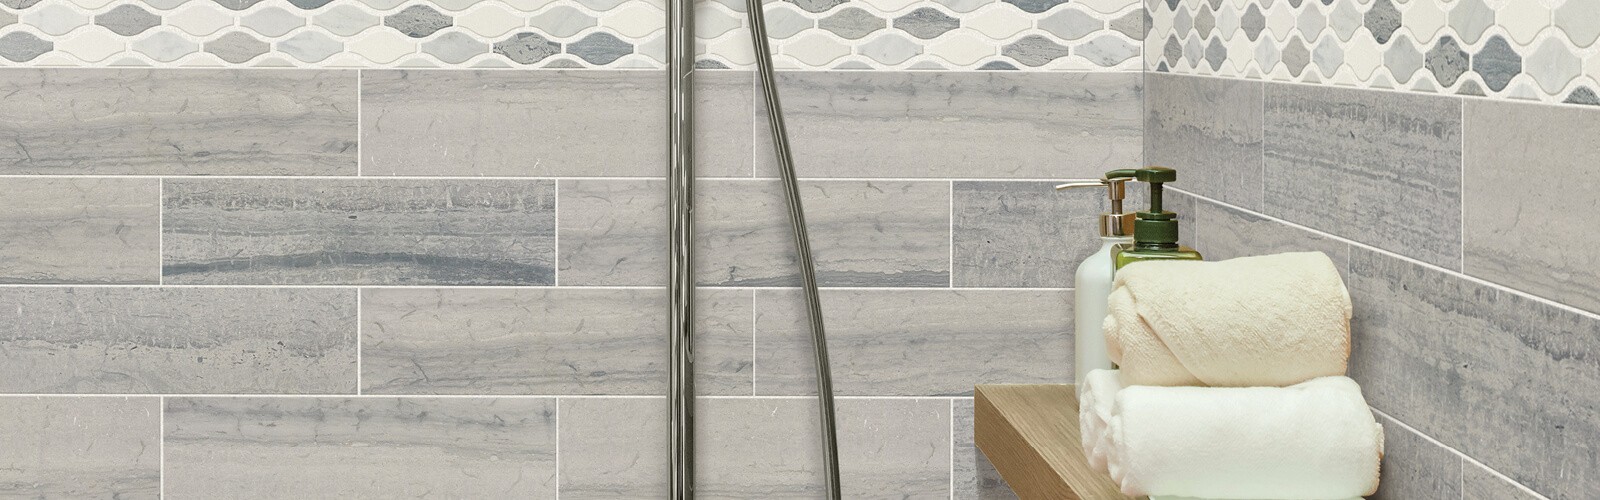 Bathroom tiles | Canales Flooring Inc.